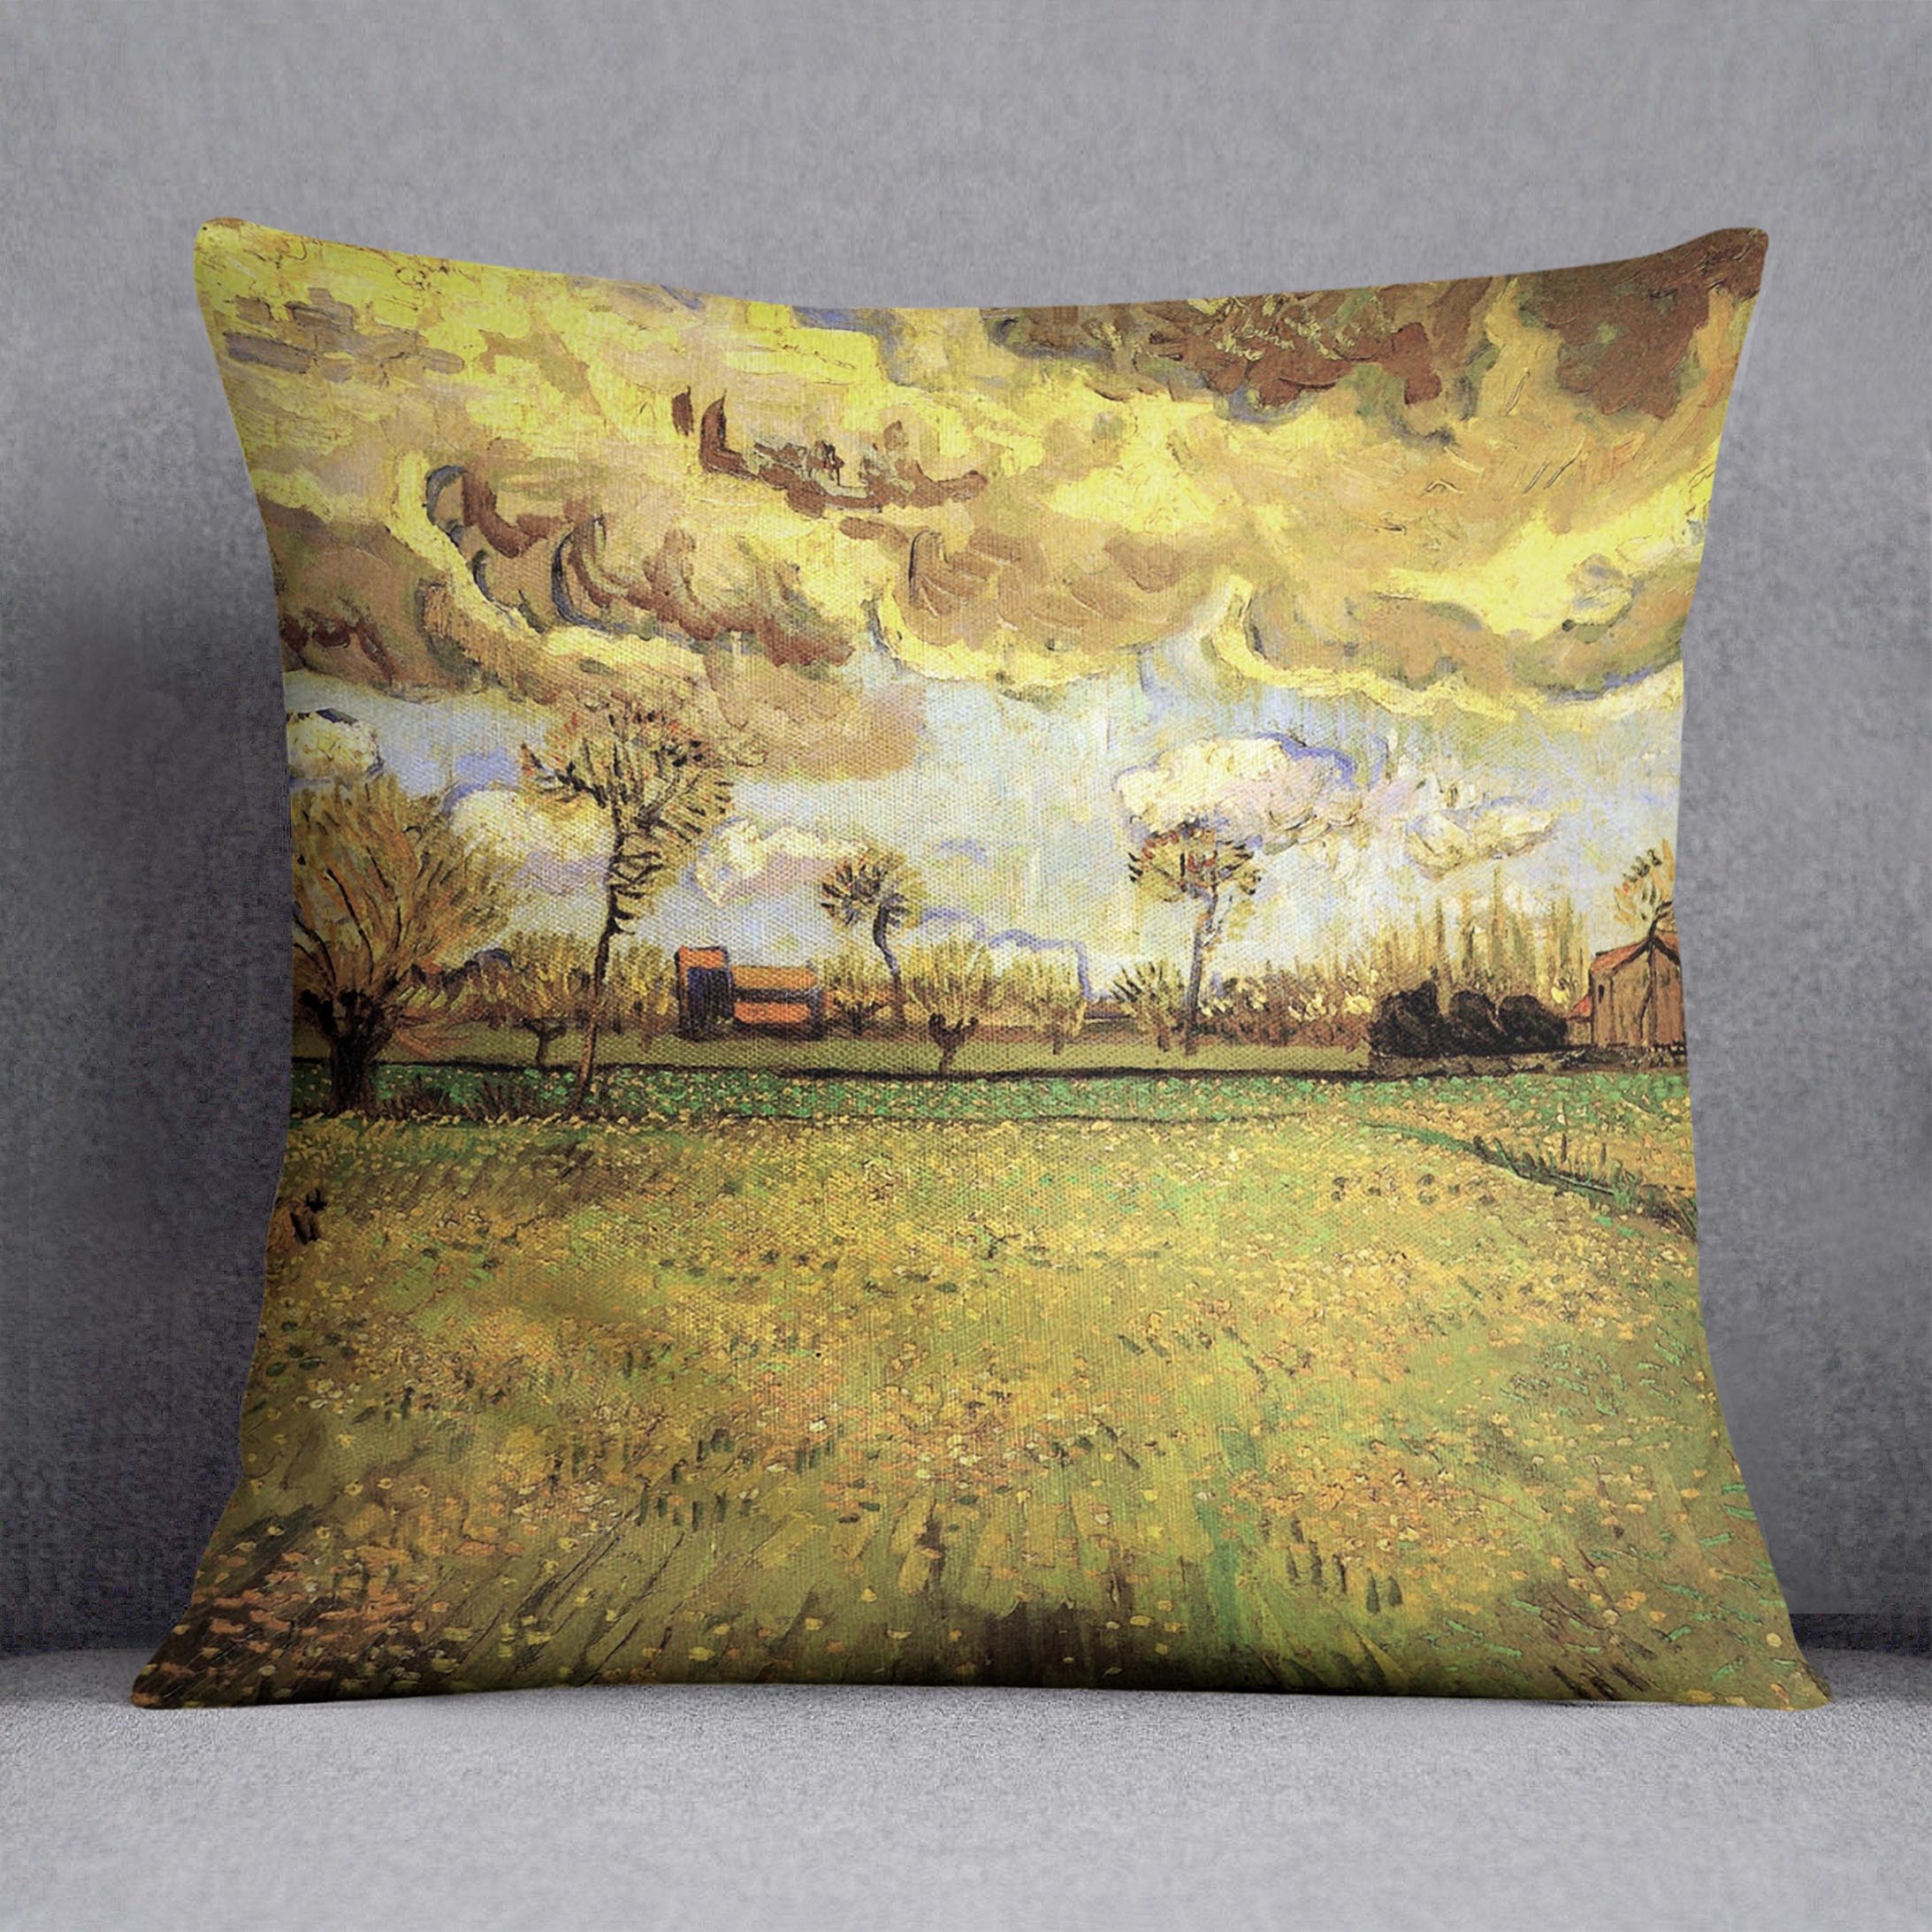 Landscape Under a Stormy Sky by Van Gogh Cushion